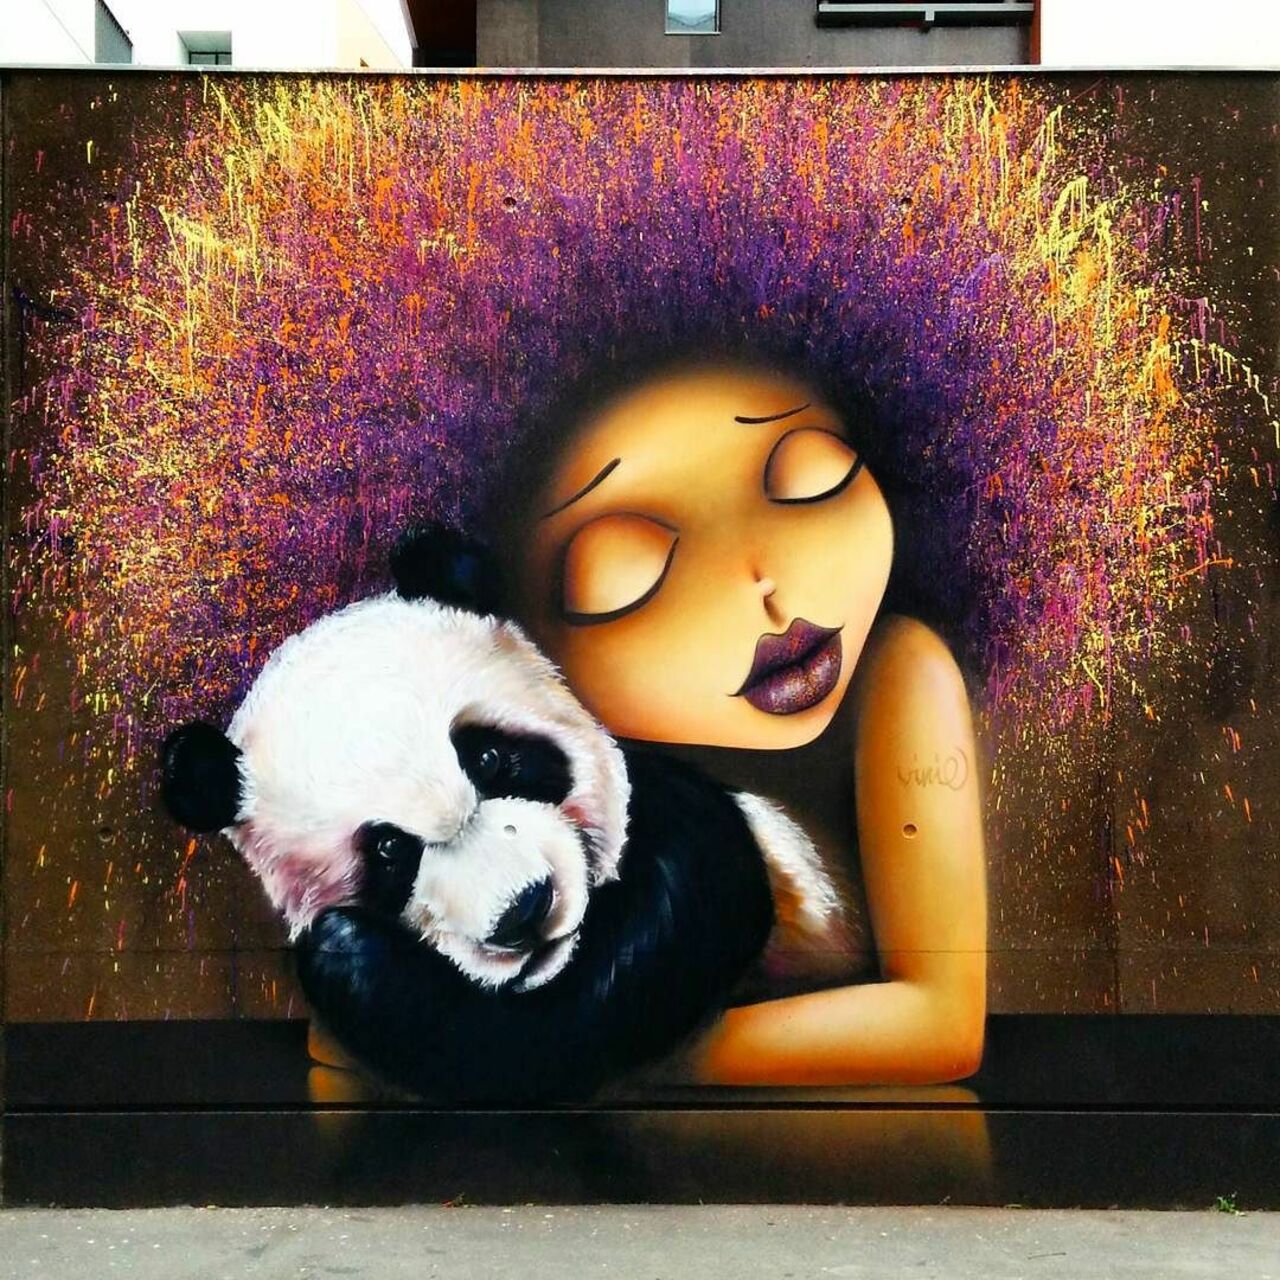 #Paris #graffiti photo by @ceky_art http://ift.tt/1MaG0PO #StreetArt https://t.co/SXvQWhqFQ9